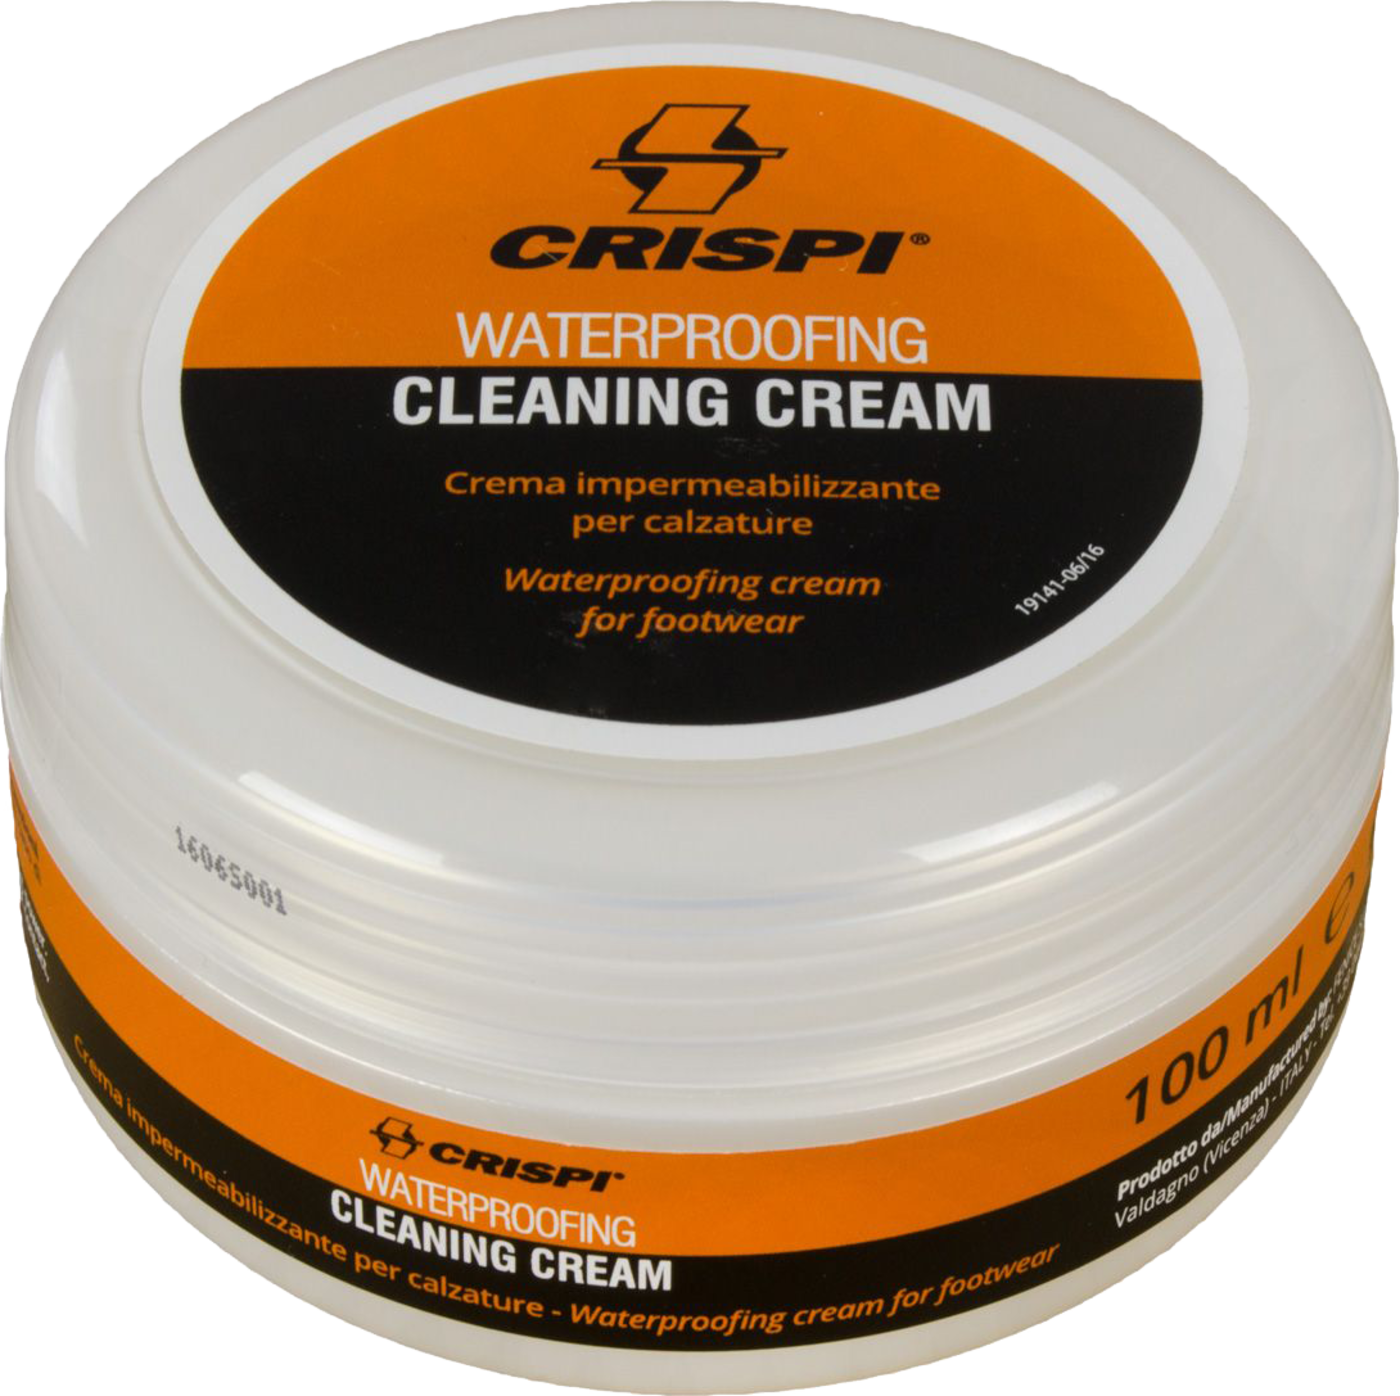 Crispi waterproofing cleaning cream